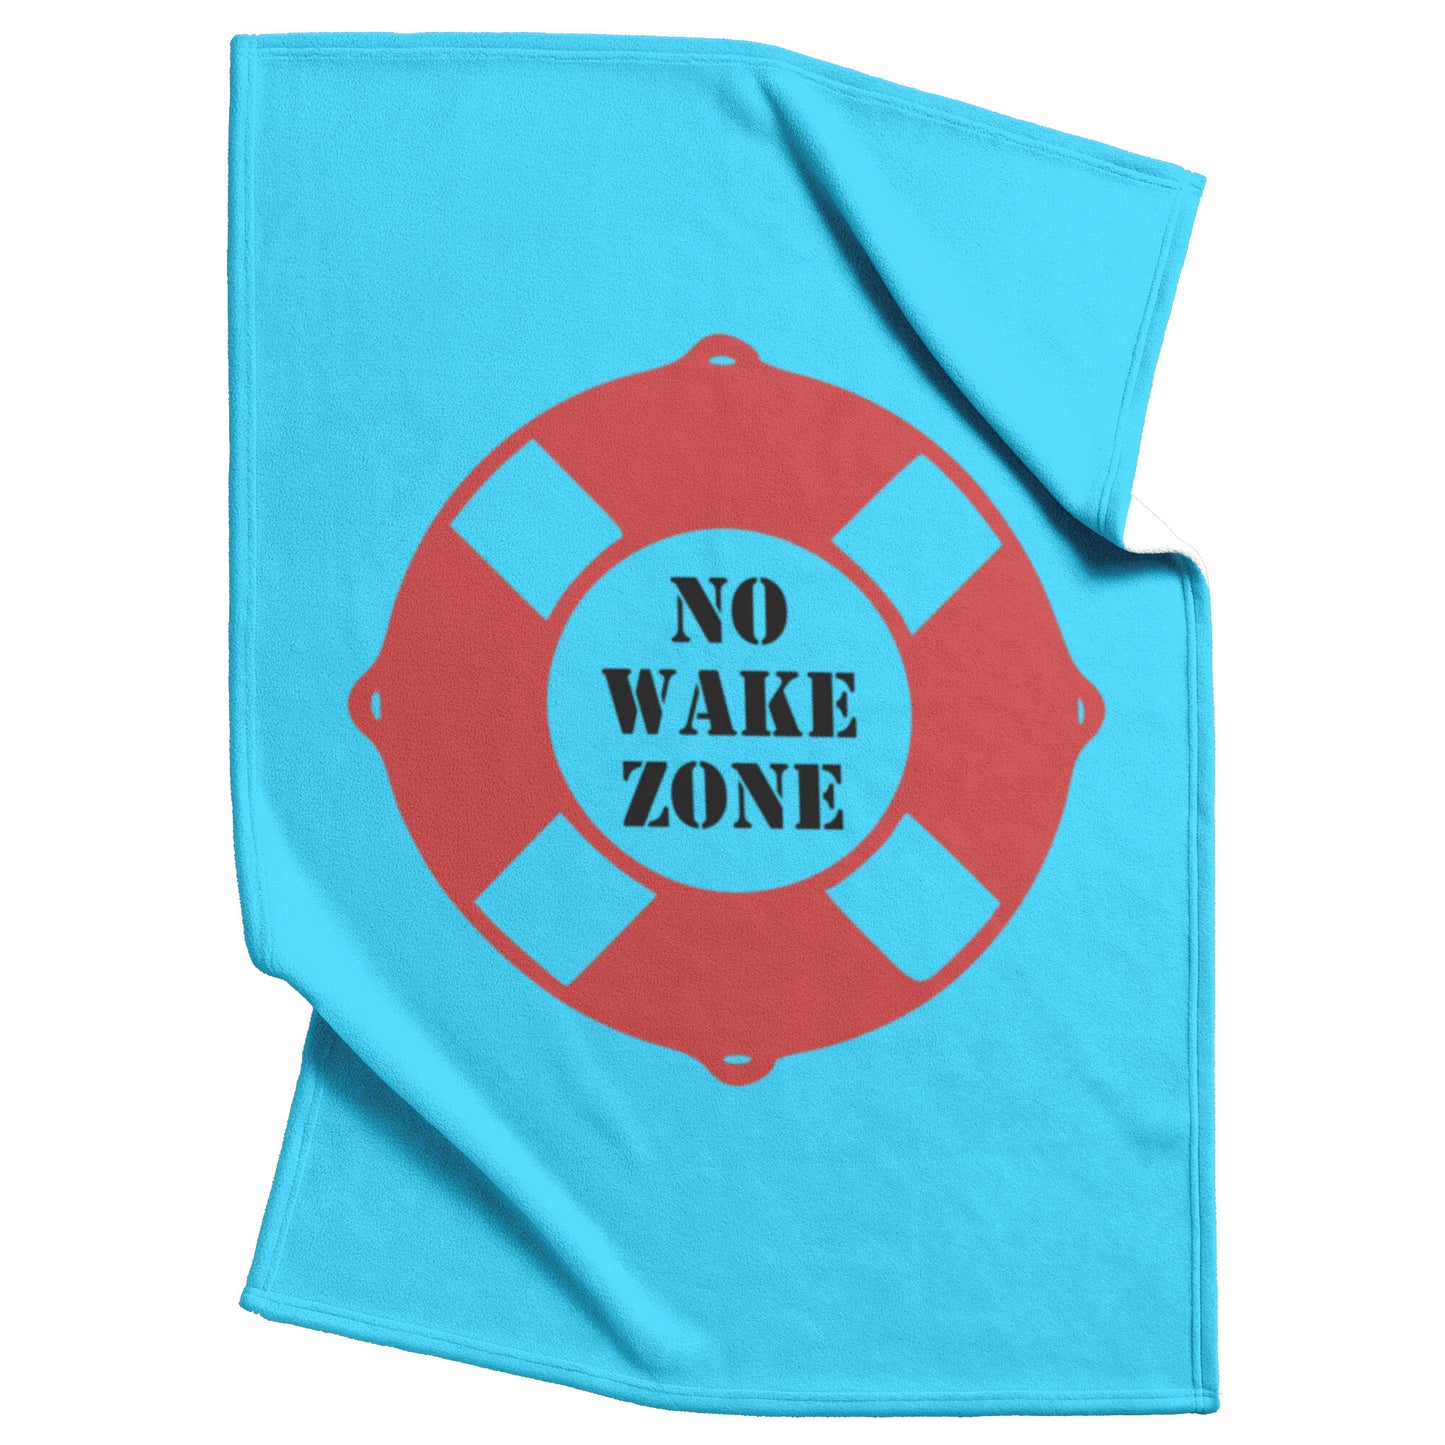 No wake zone blanket